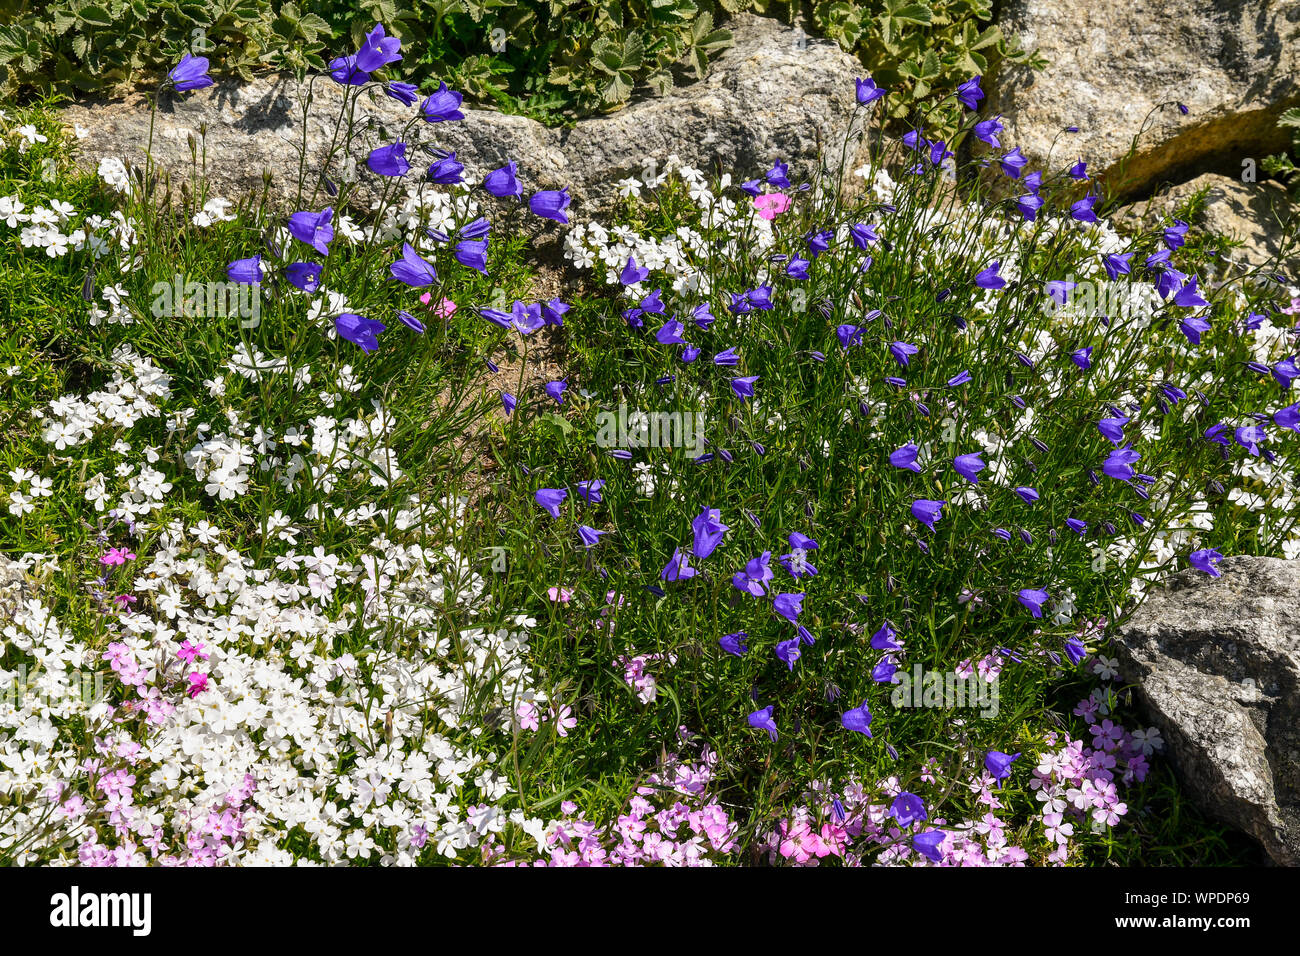 Close-up of a rocky garden with blooming Alpine flowers: mountain phlox (Phlox subulata) and bellflower (Campanula alpina), Courmayeur, Aosta, Italy Stock Photo